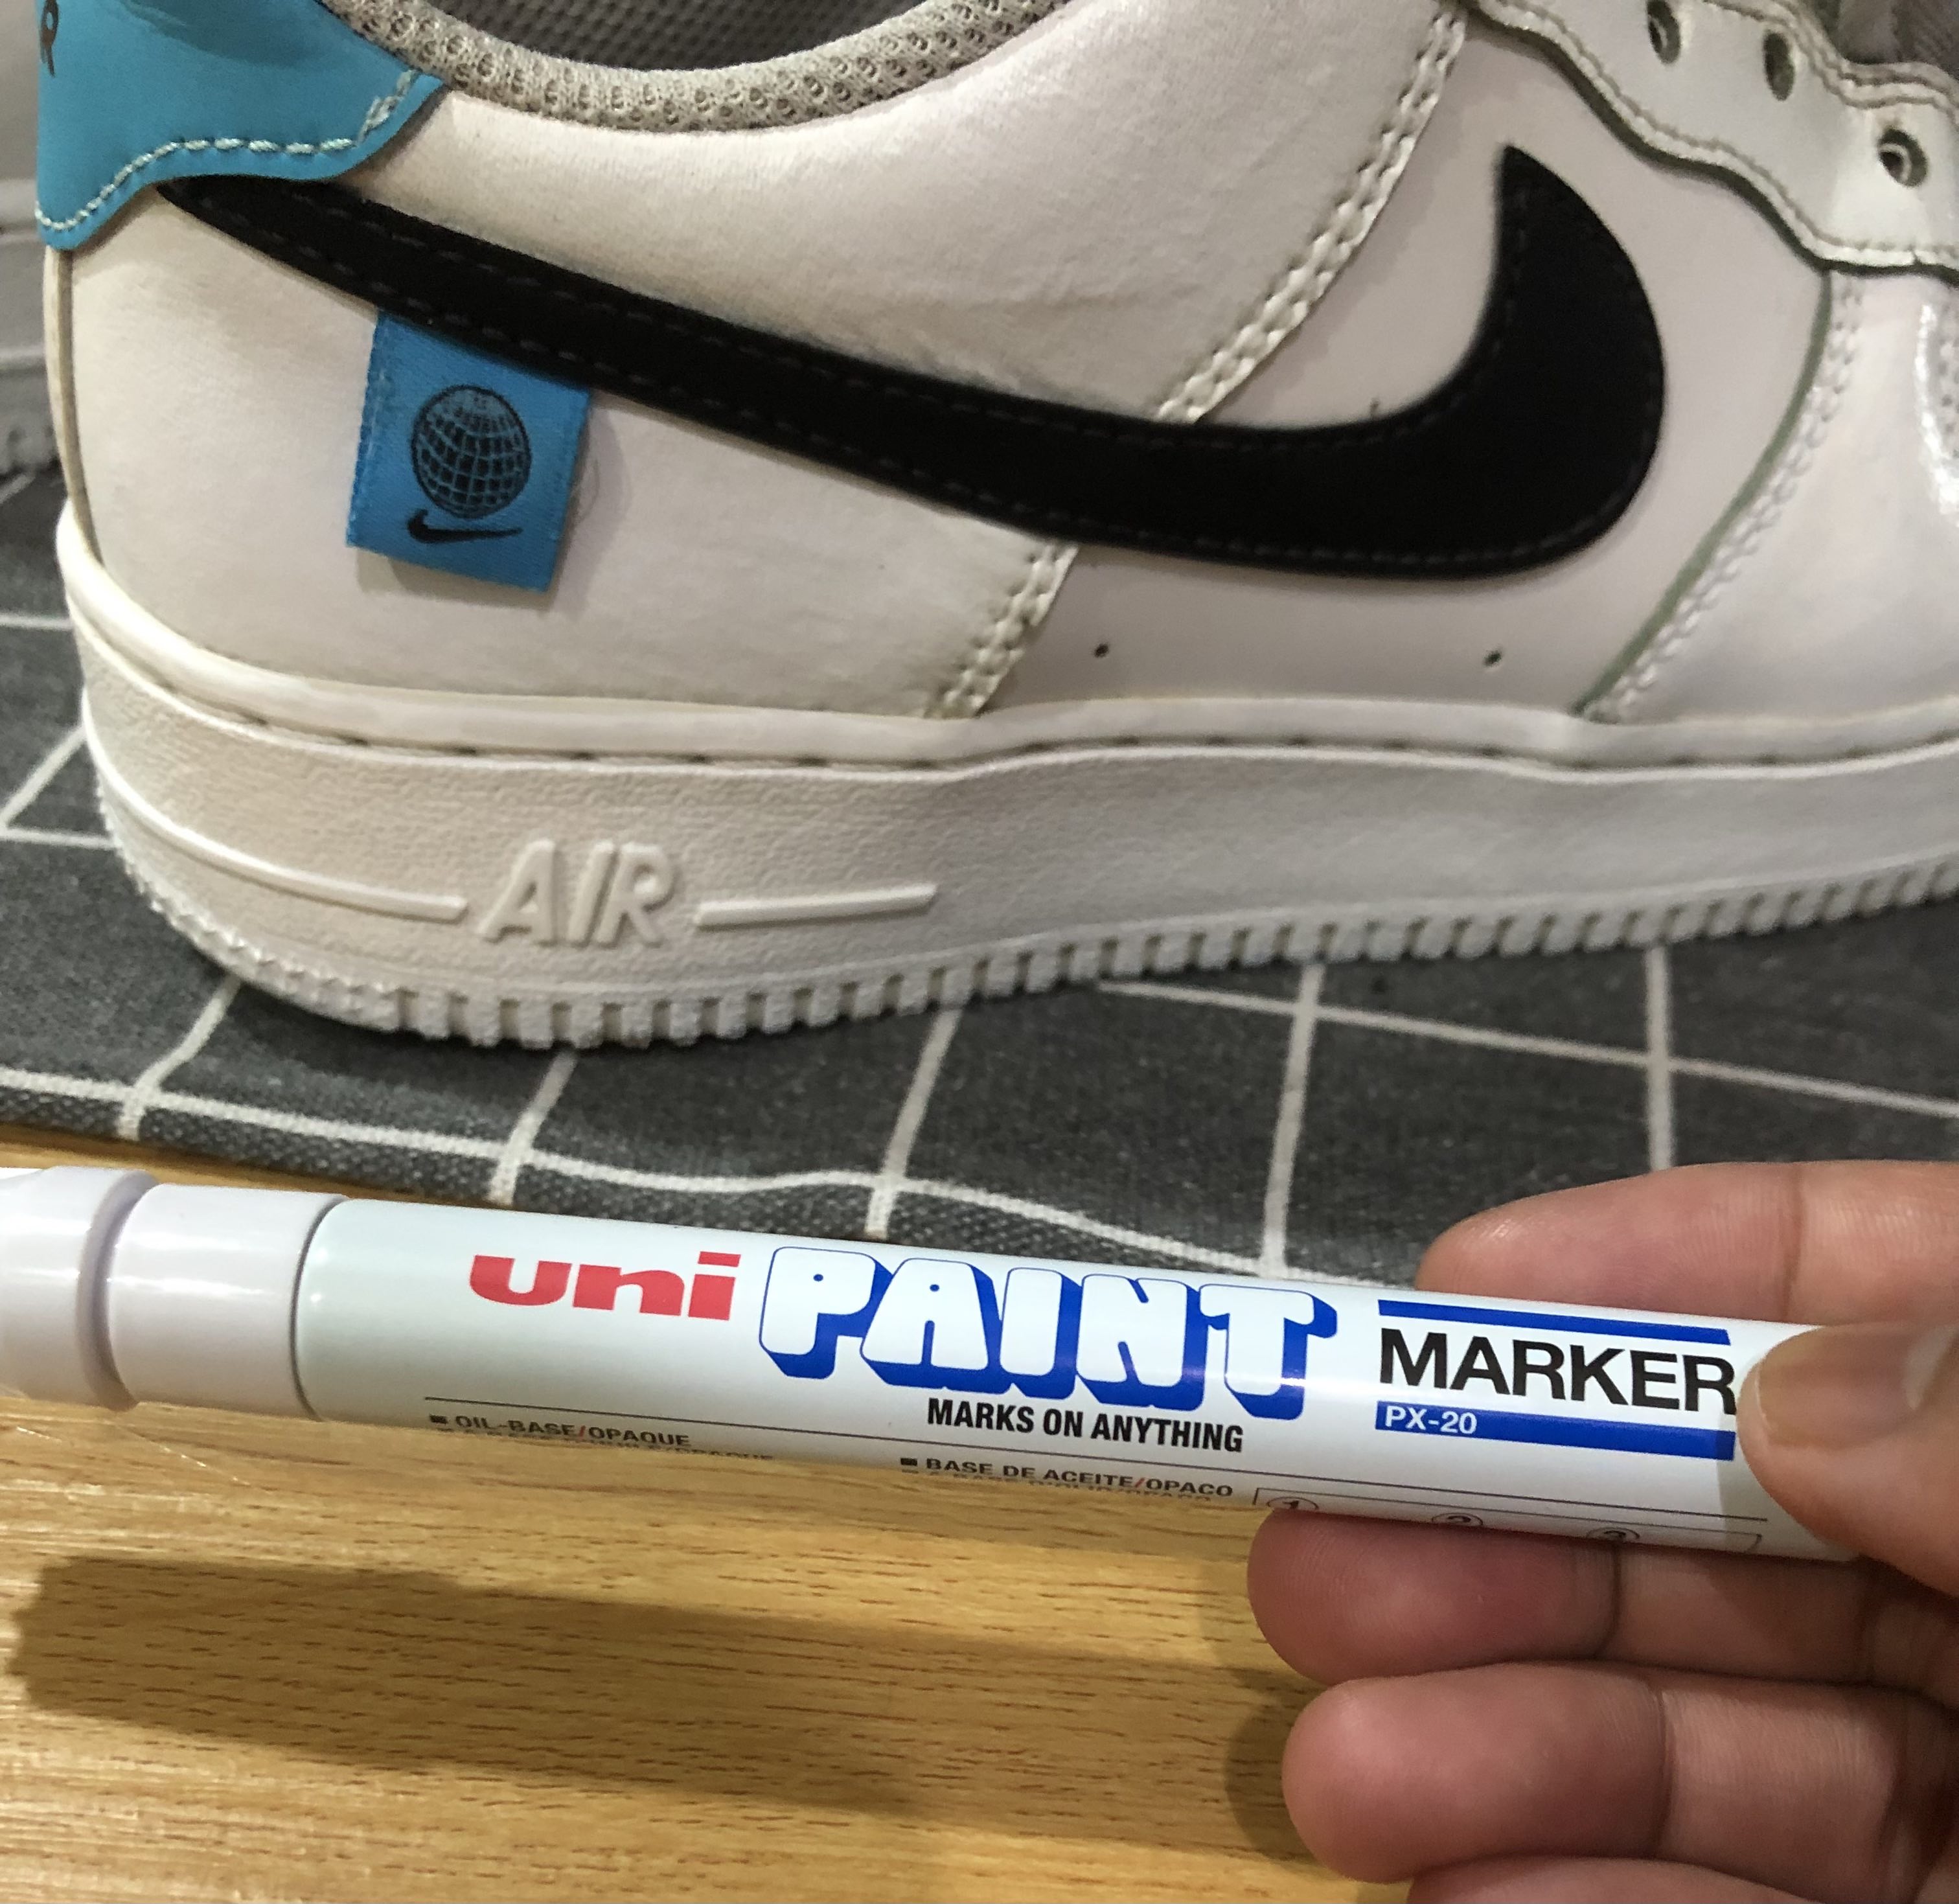 Buy Huanyo Uni Paint Marker Medium Tip - White (Nike Adidas Boost